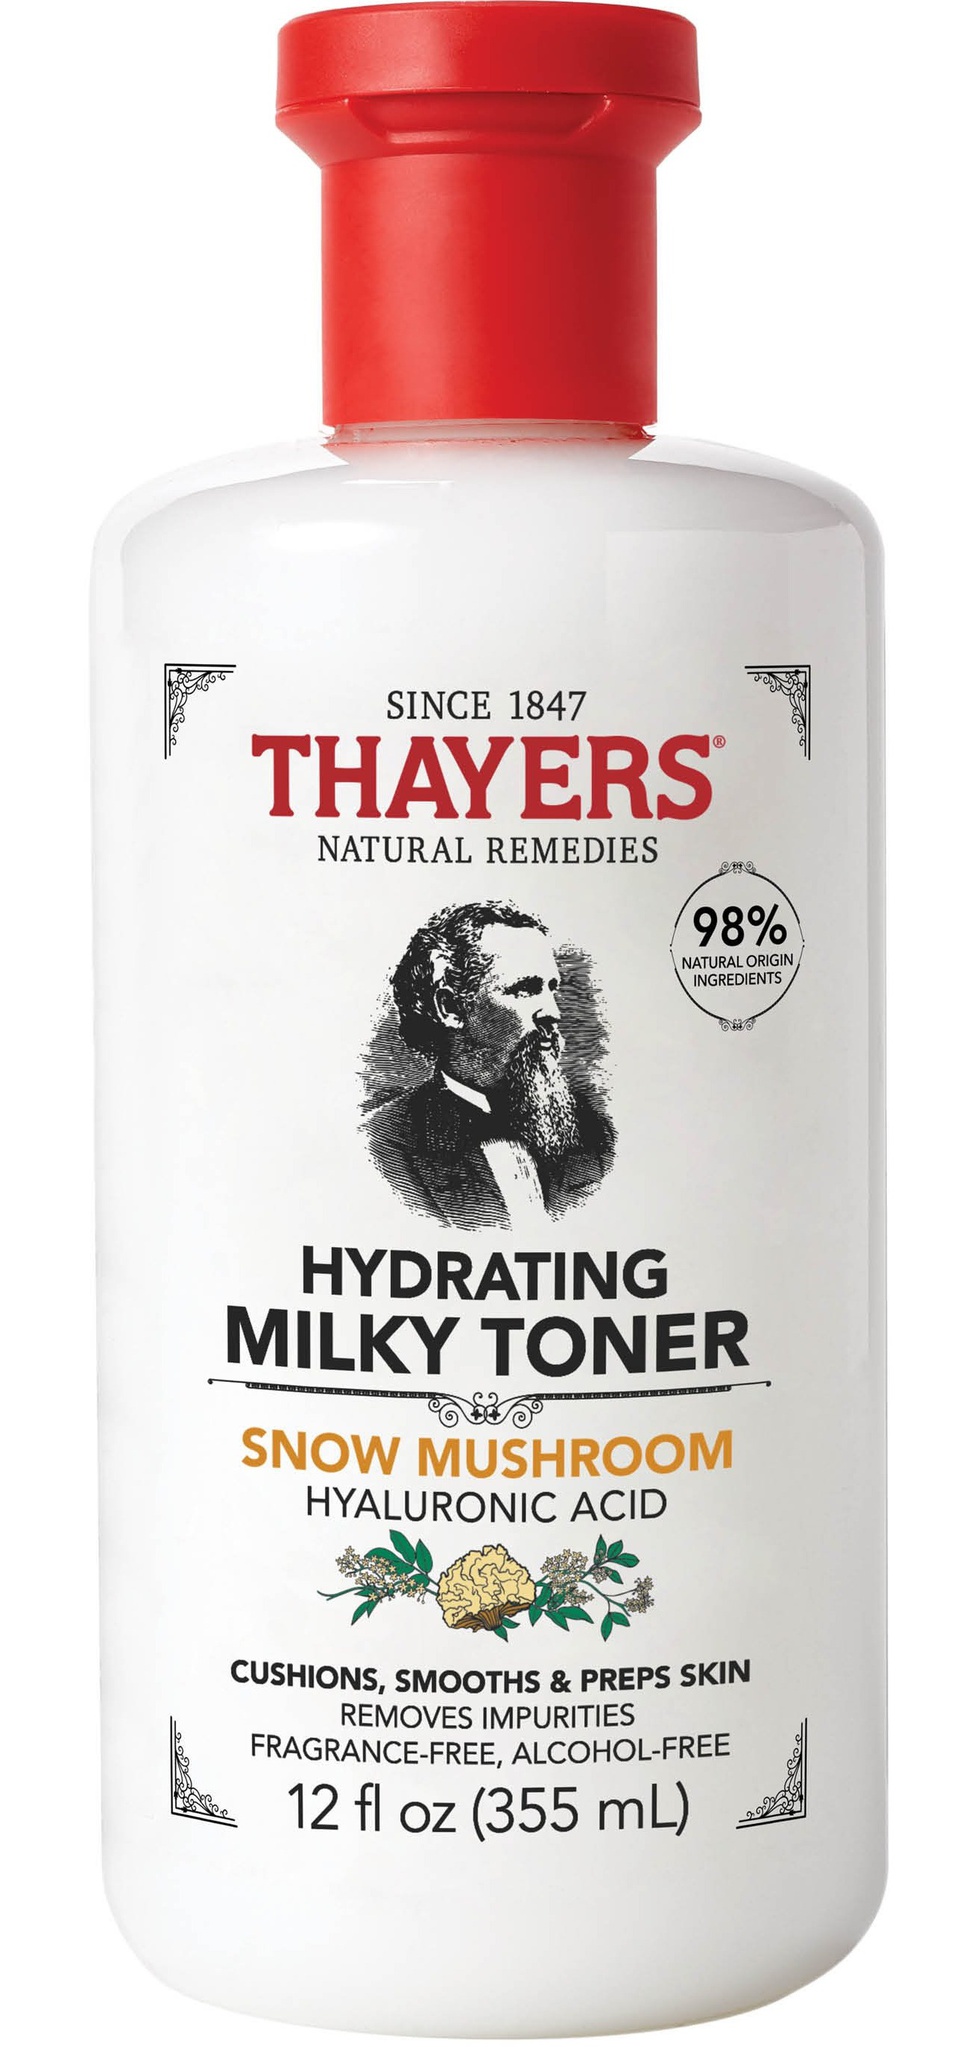 Thayers Milky Hydrating Face Toner